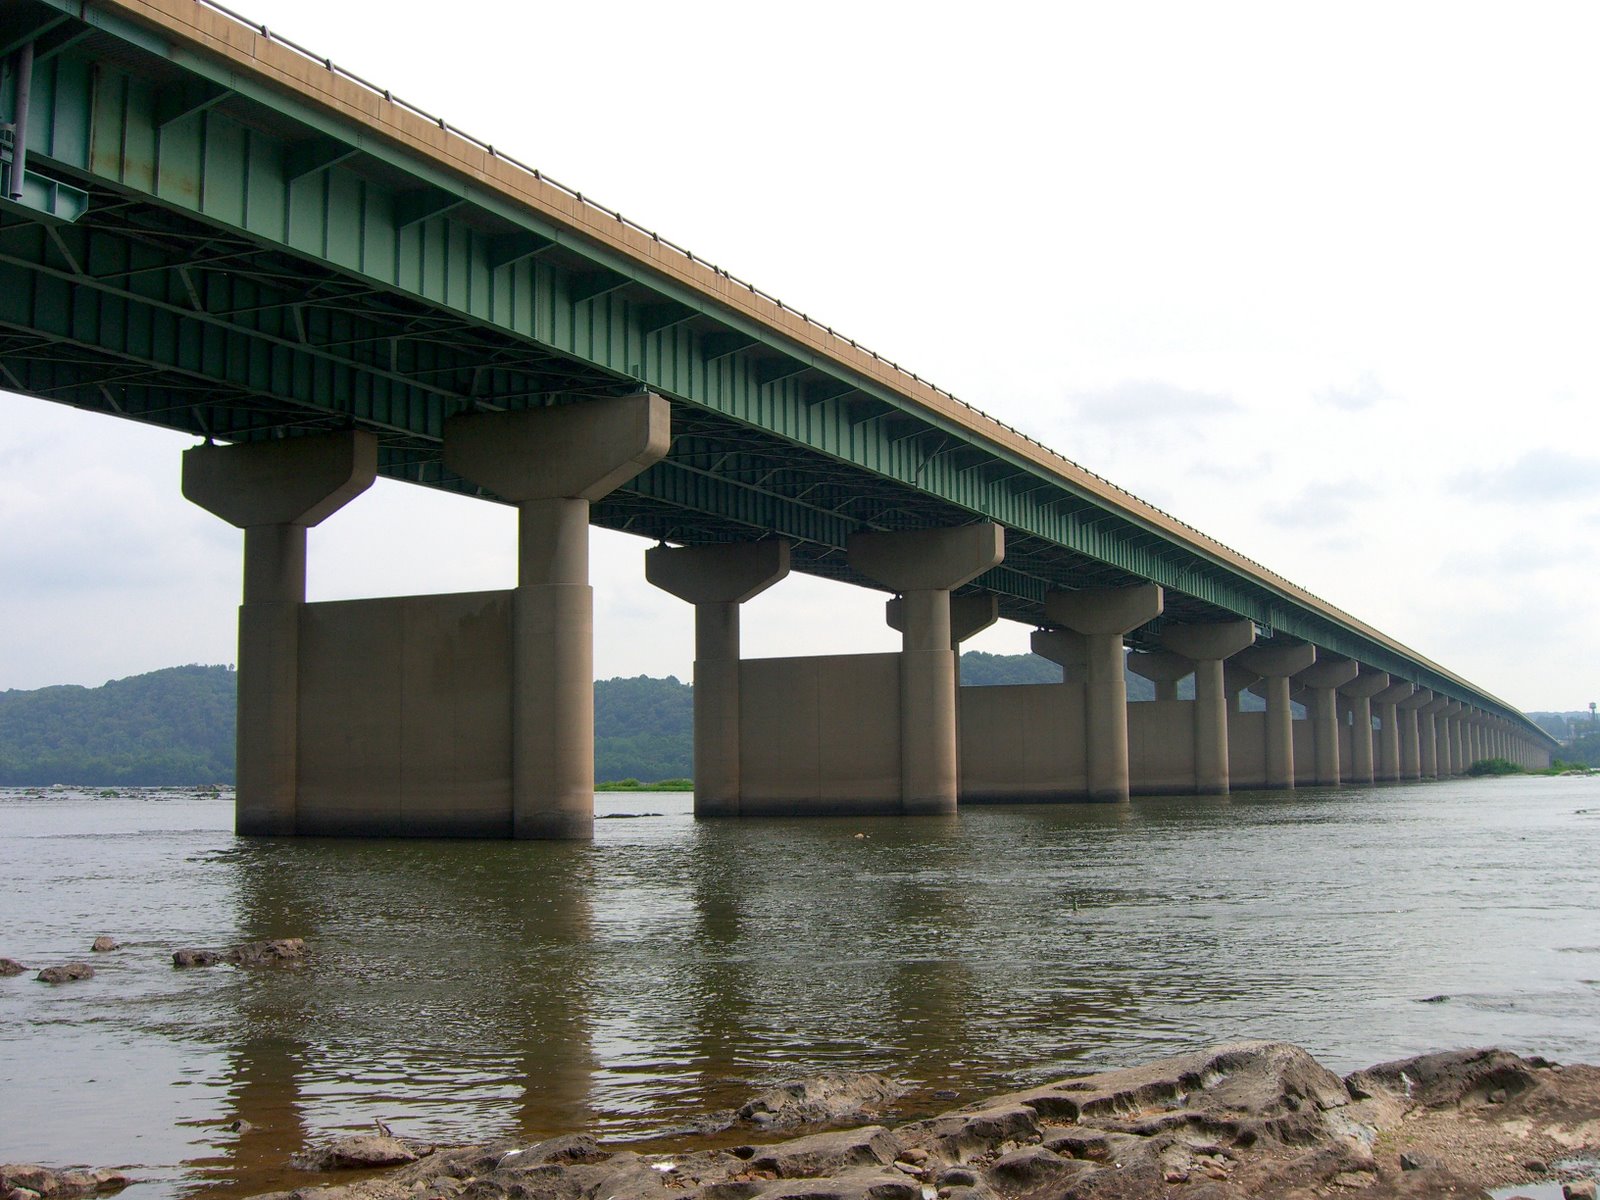 File:Wright's Ferry Bridge.jpg - Wikipedia